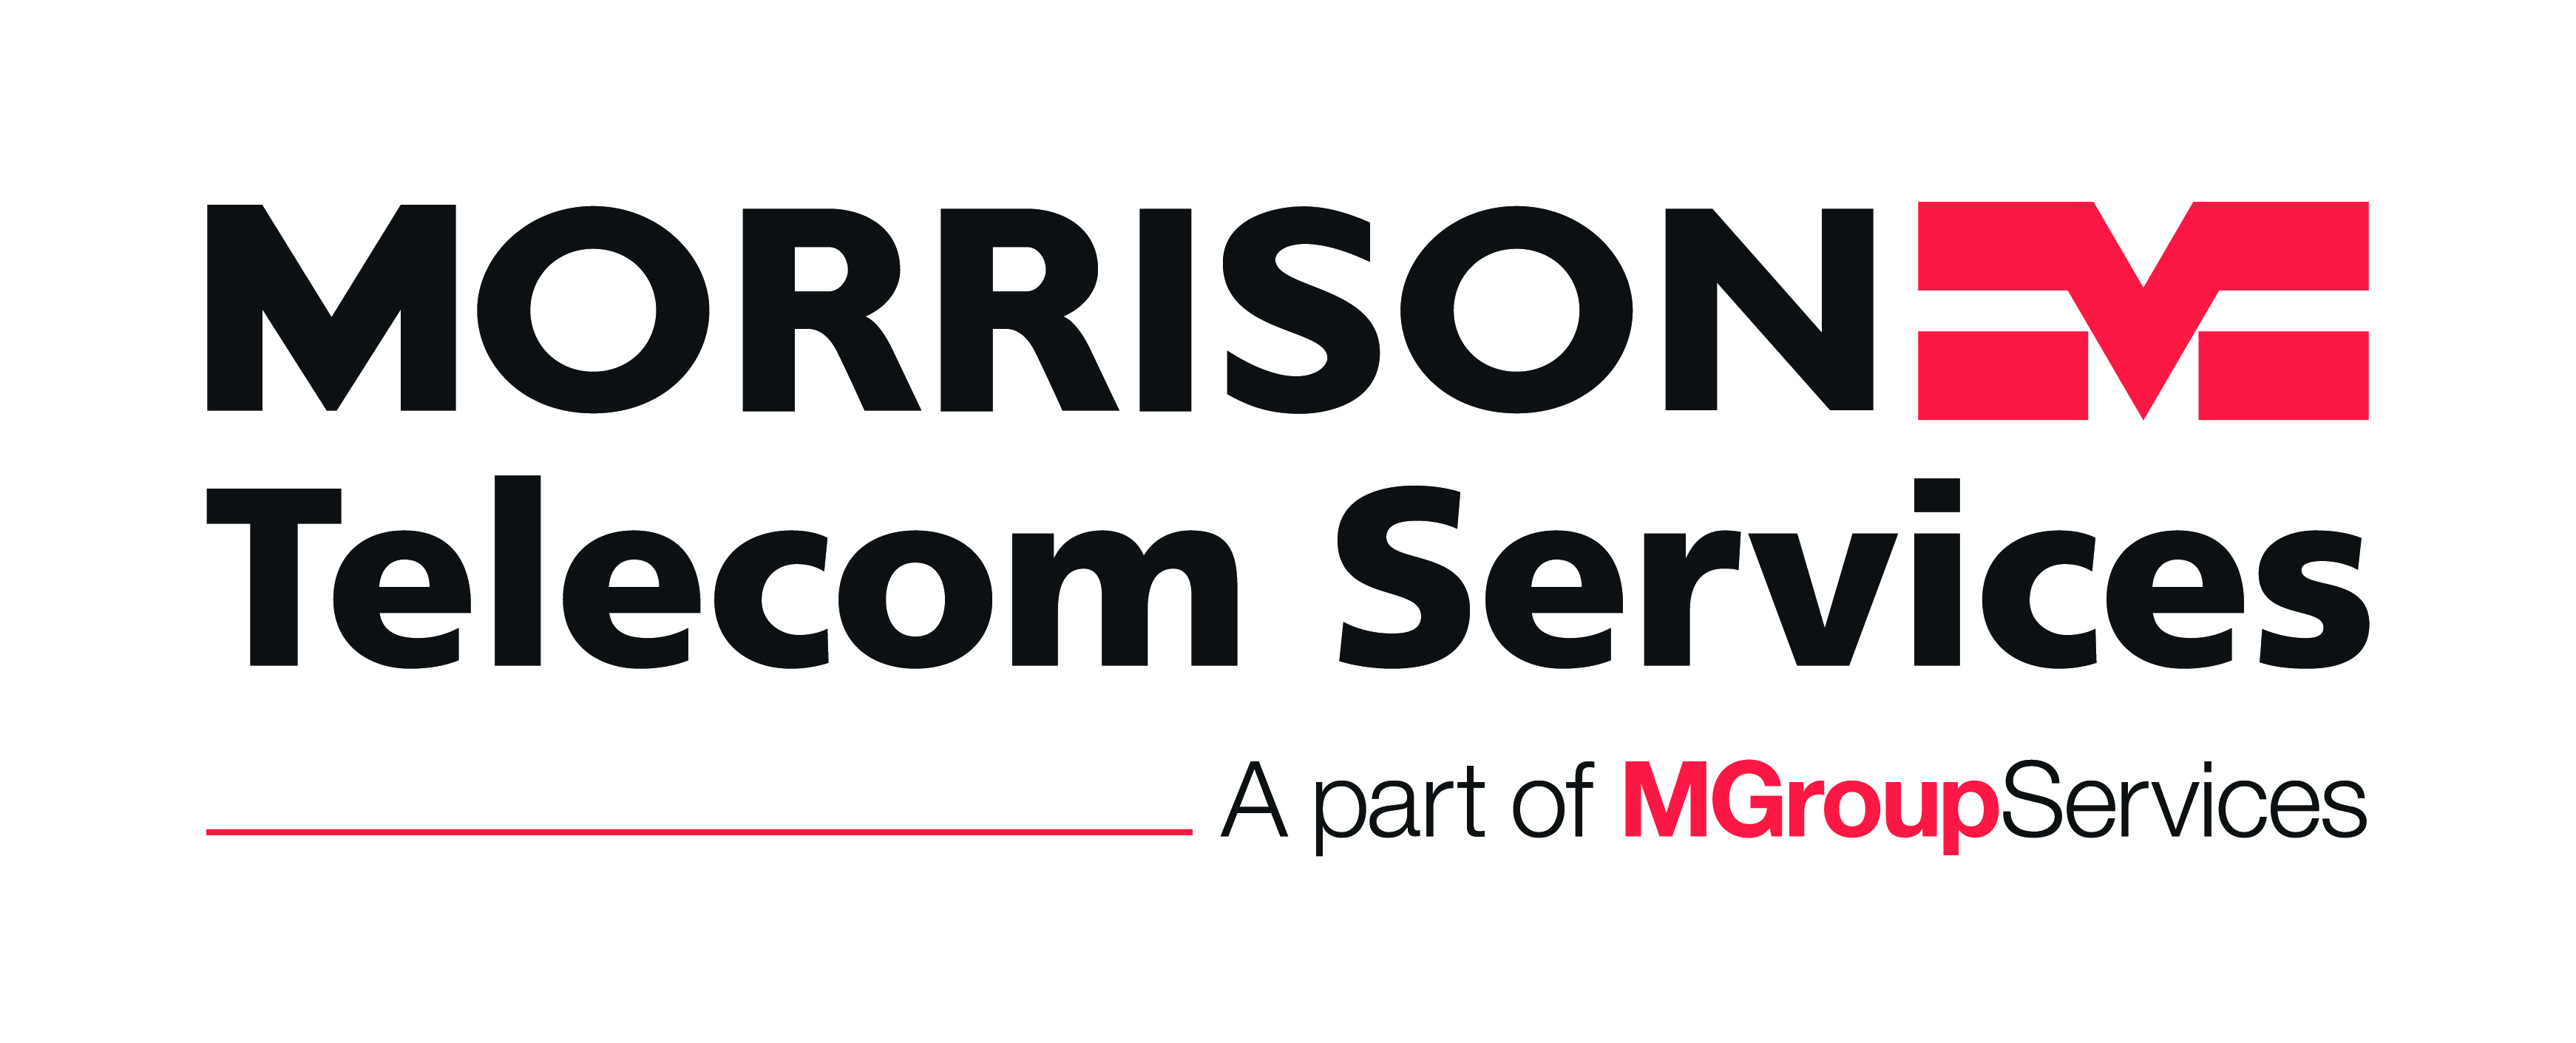 Morrison Telecom Services logo CMYK